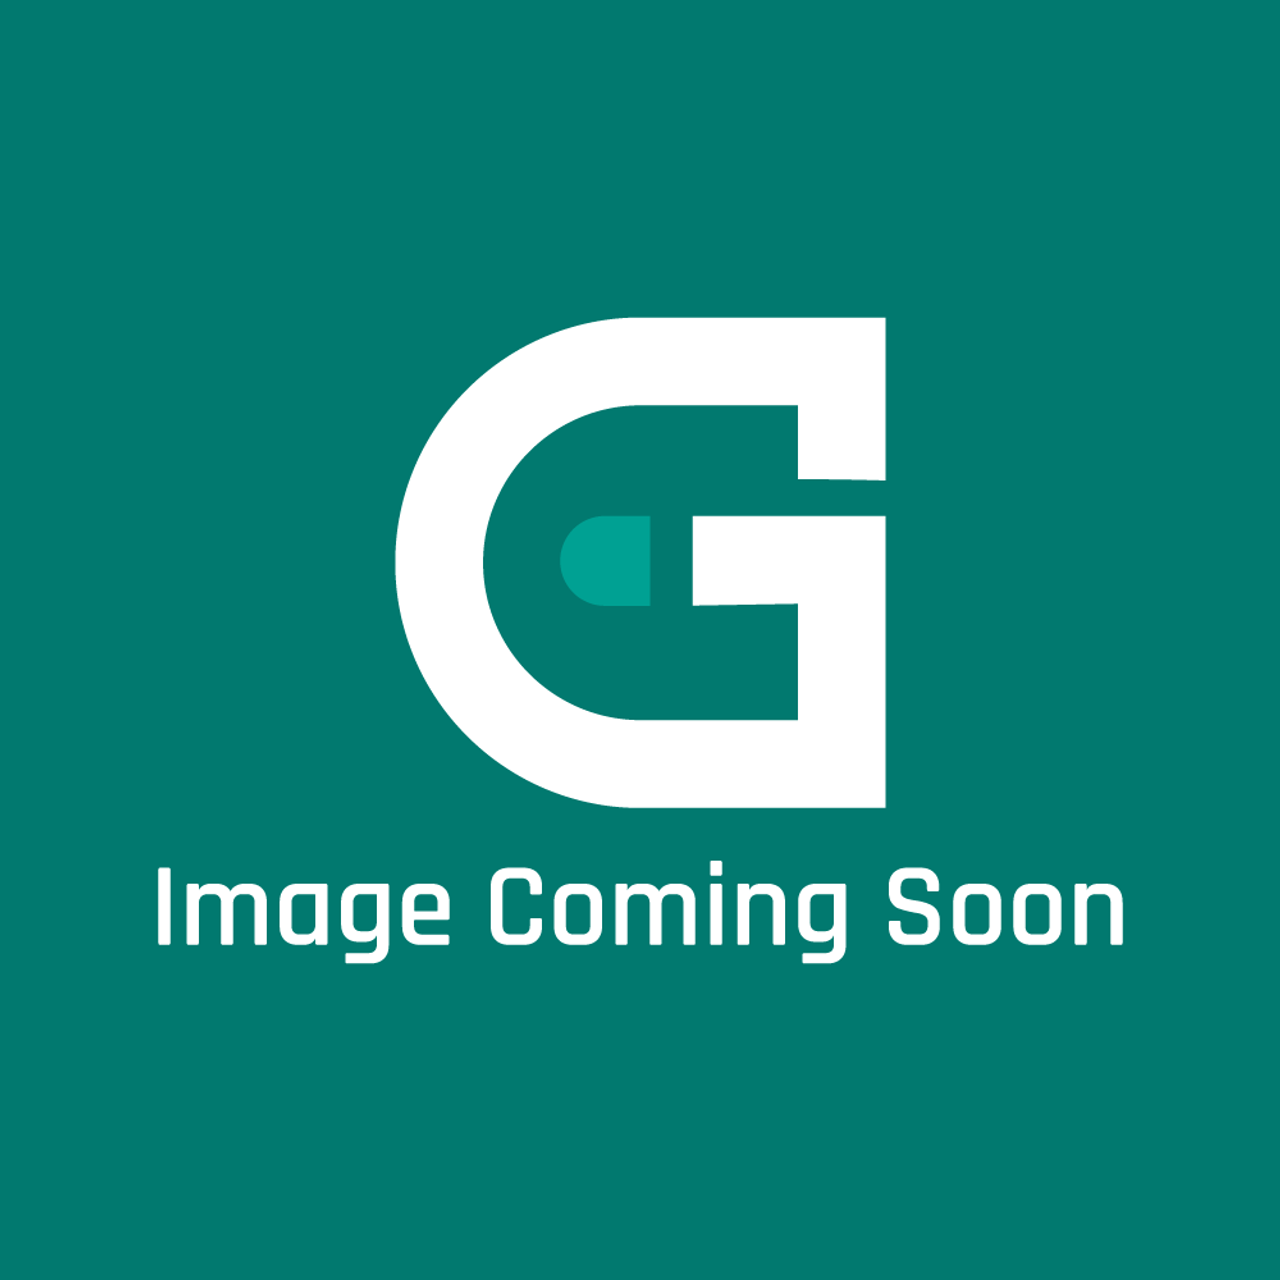 GE Appliances WE01X10394 - Nozzle Mist - Image Coming Soon!